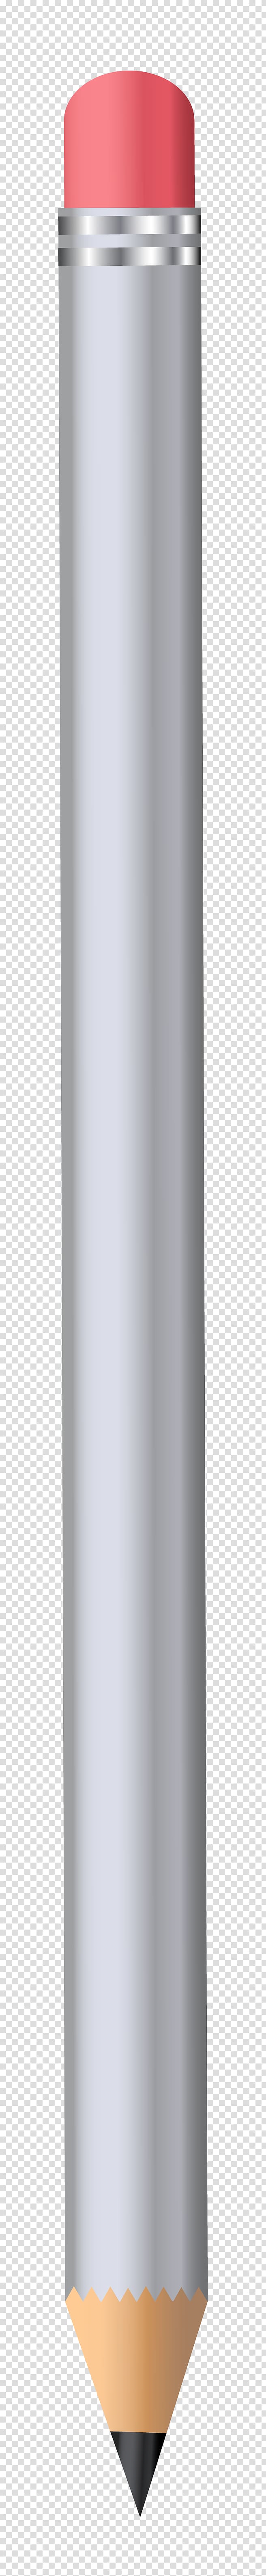 gray pencil illustration, Cylinder Design Product, Silver Pencil transparent background PNG clipart